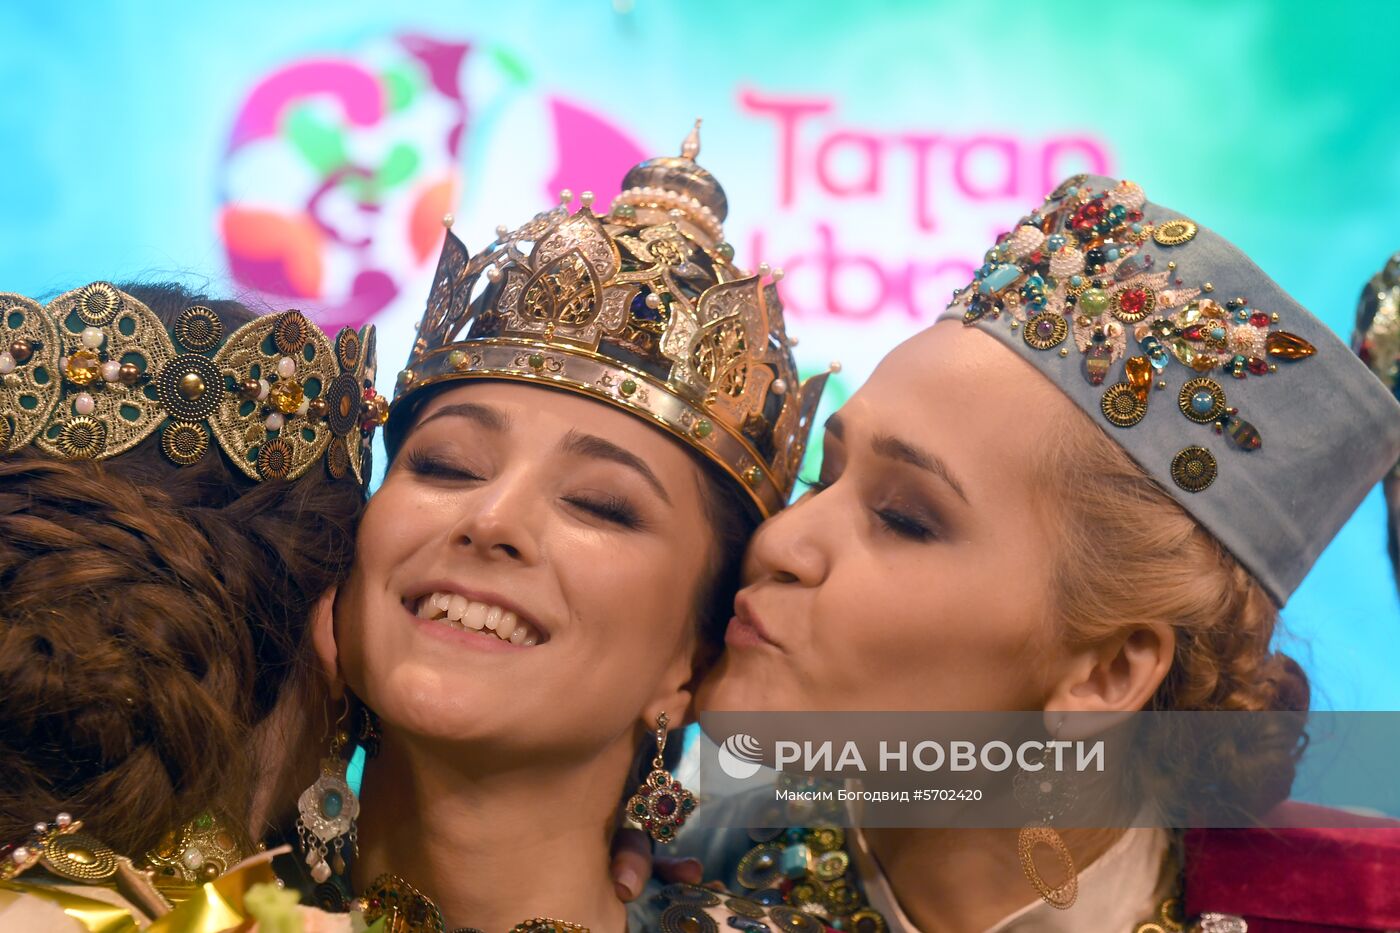 Международный конкурс красоты "Татар кызы" в Казани